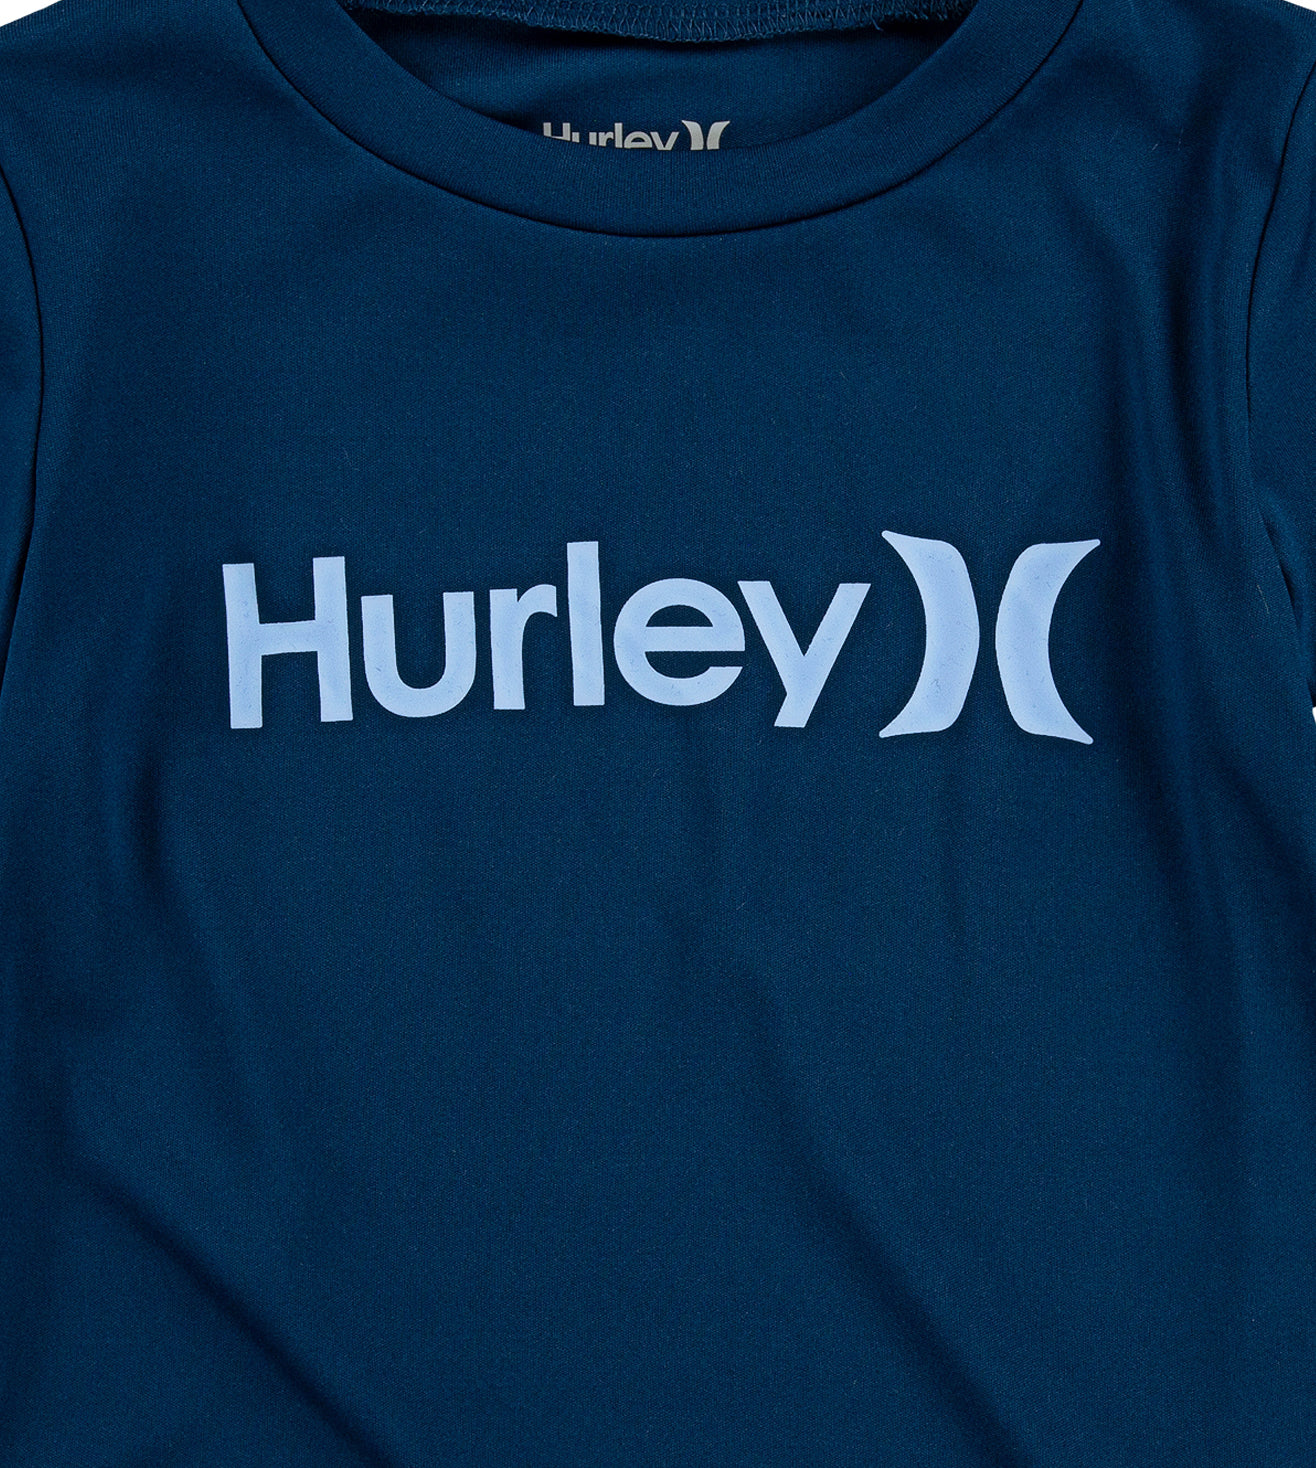 Hurley Black UPF 50+ T-Shirt and Swim Trunks 2-Piece Set Shorts Set Hurley   